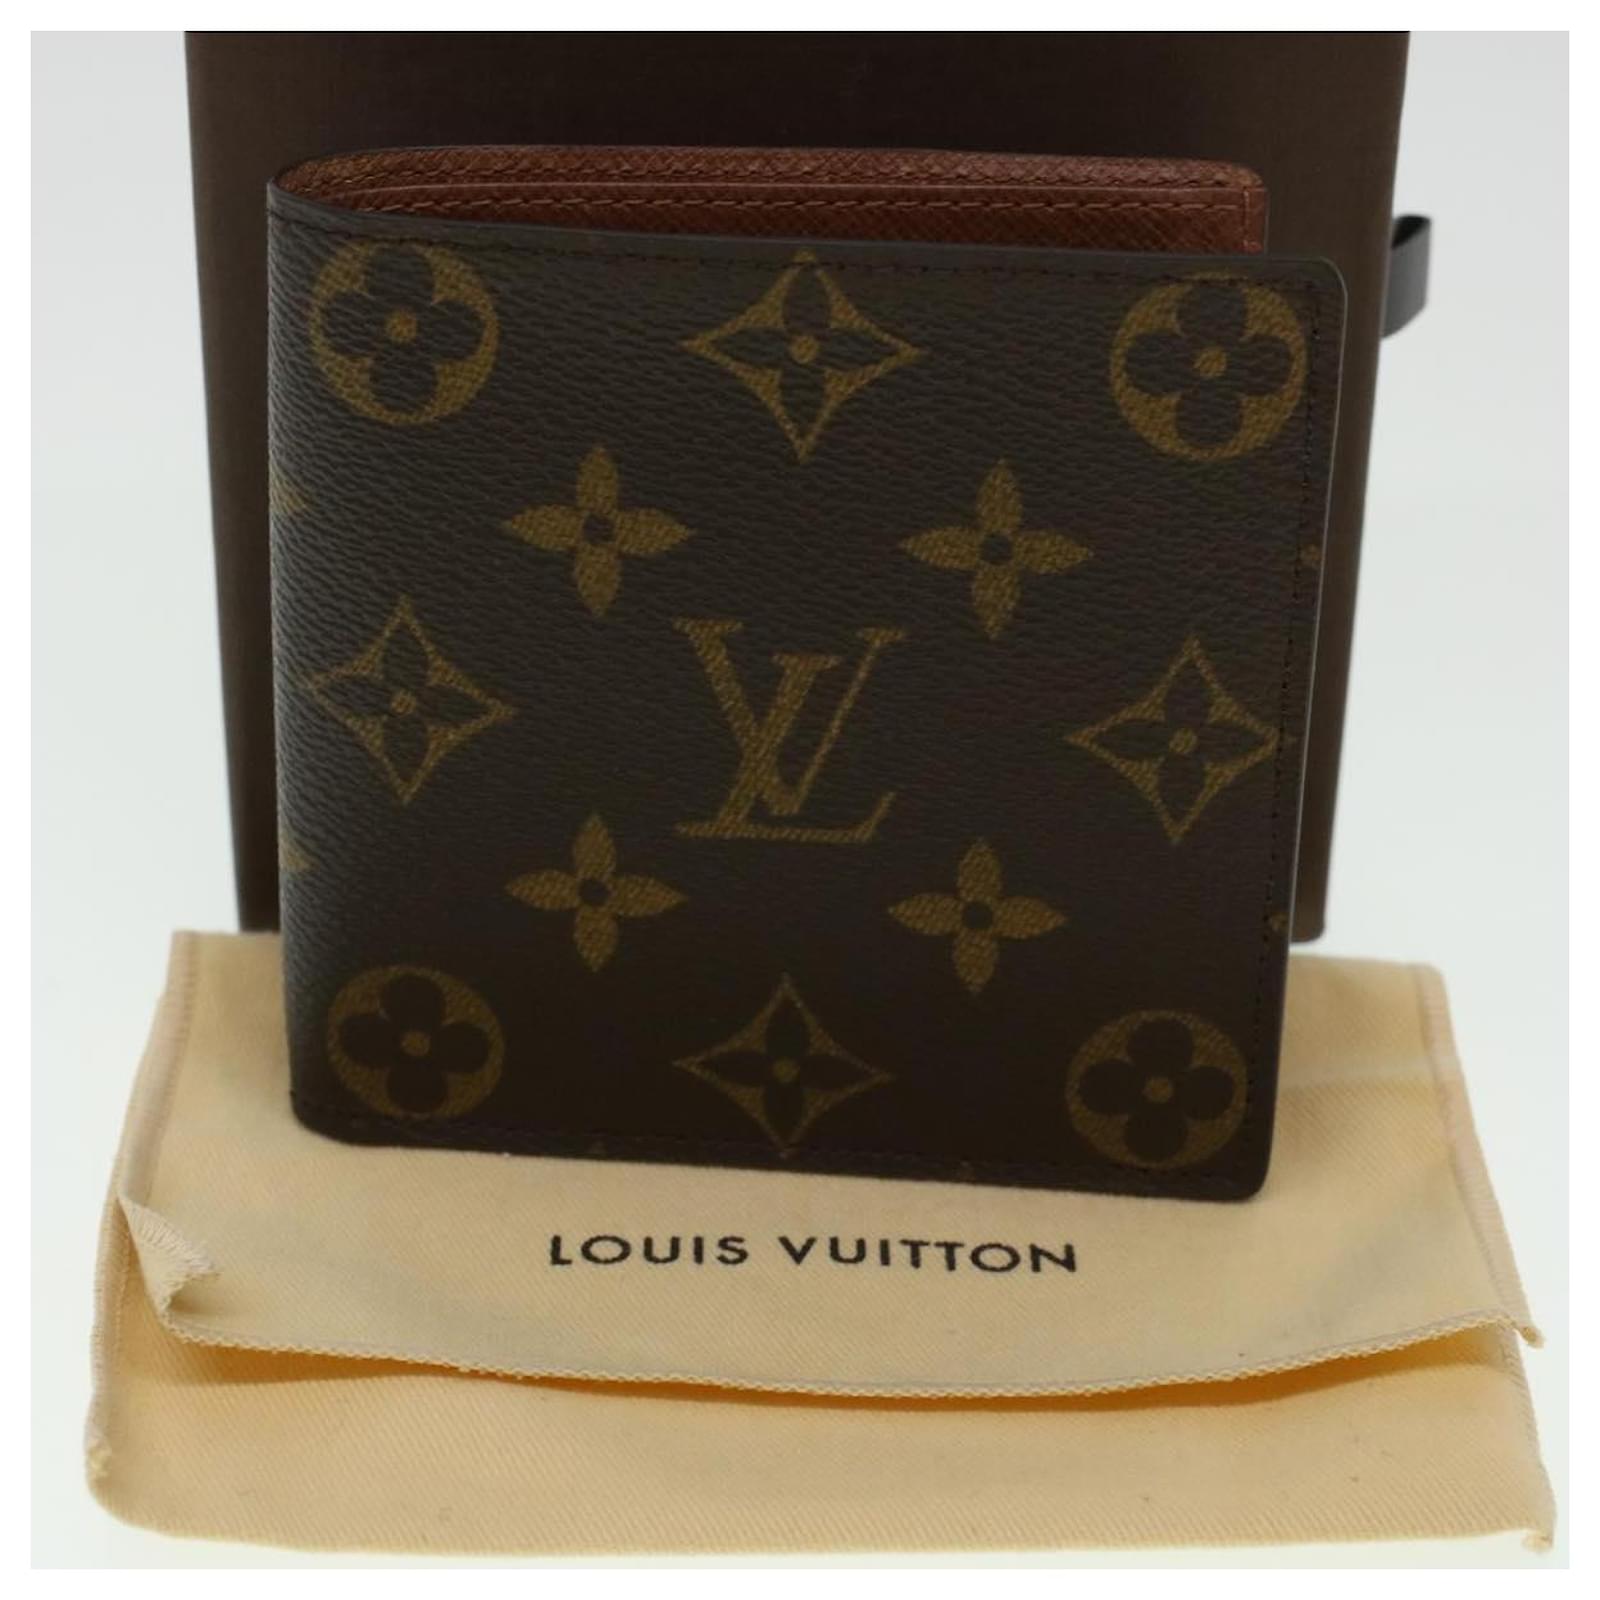 Buy [Used] LOUIS VUITTON Portefeuille Marco Bifold Wallet Monogram